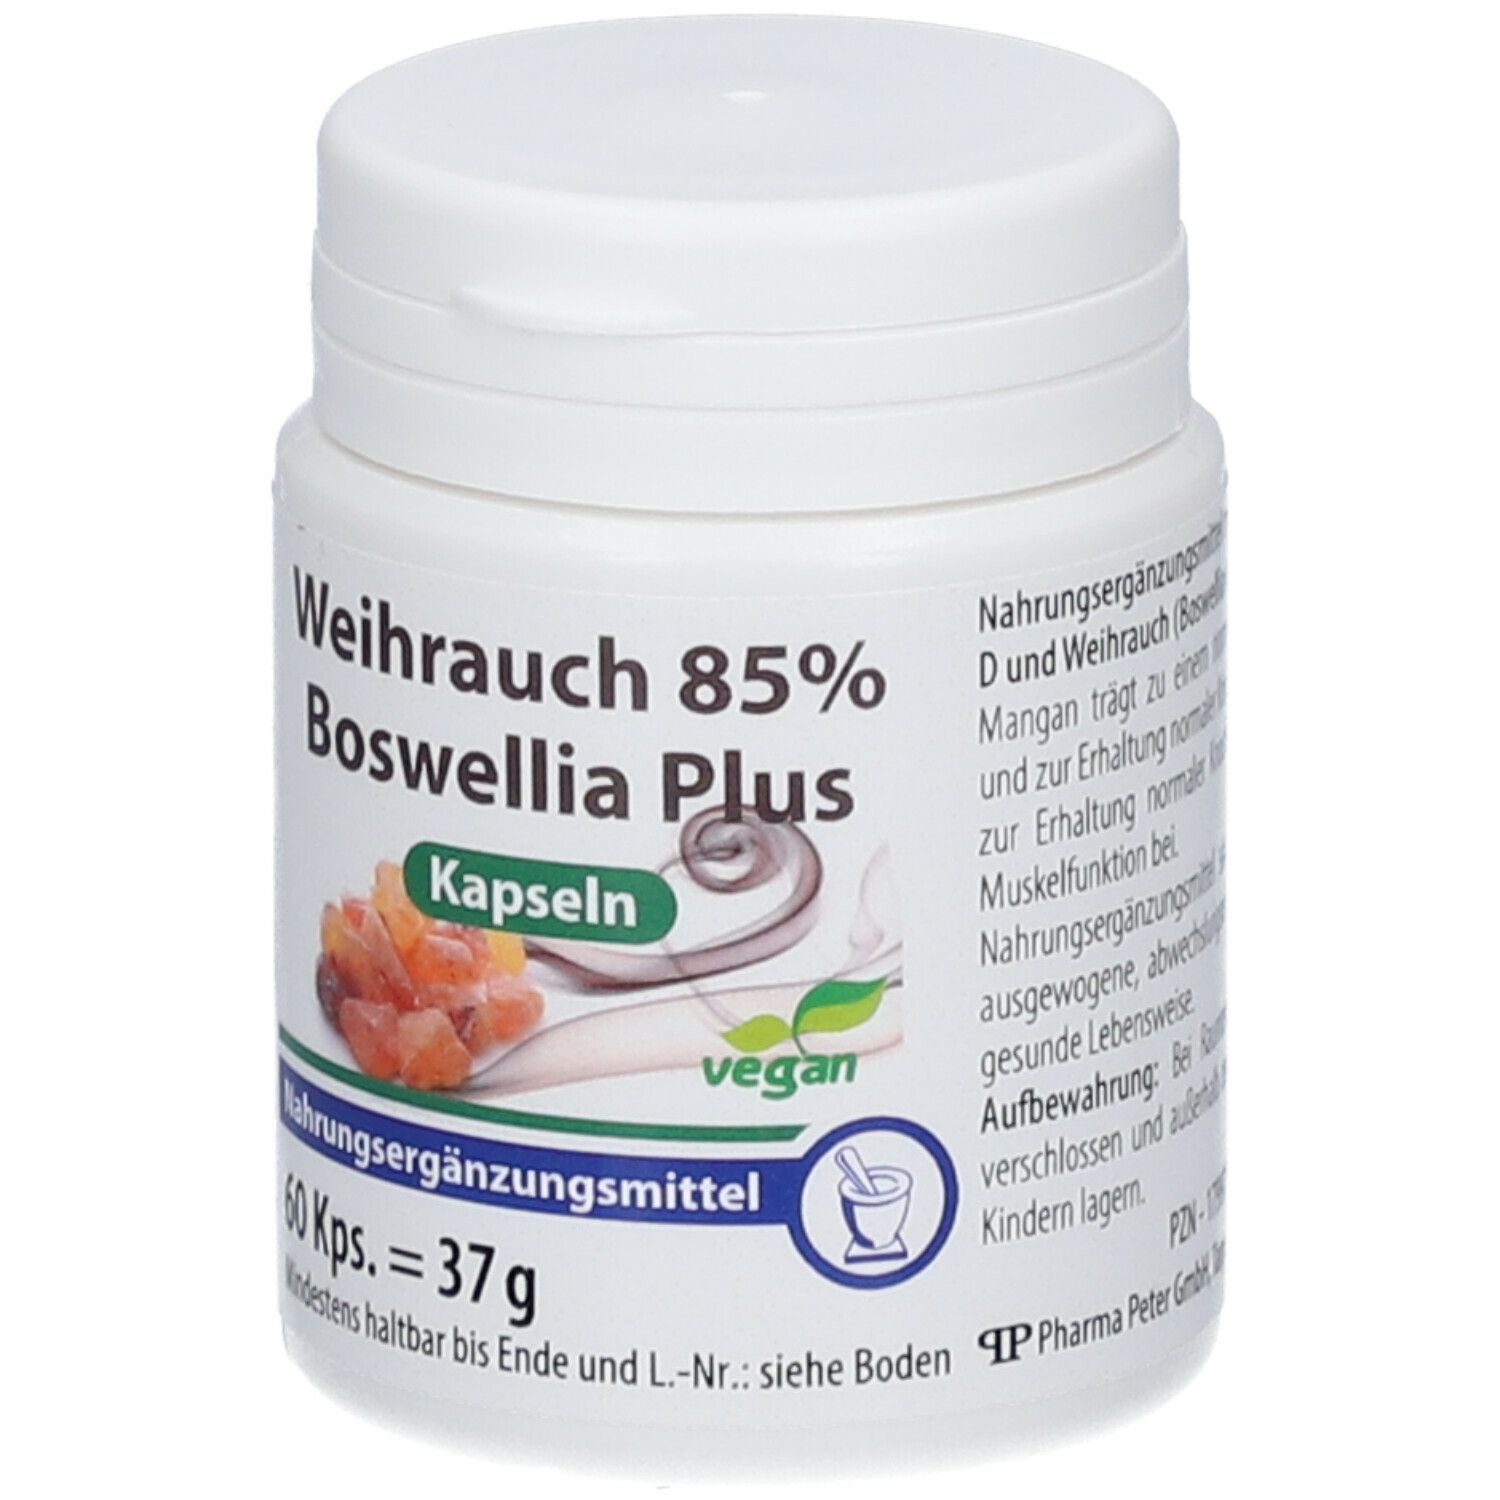 Weihrauch 85% Boswellia Plus vegan Kapseln